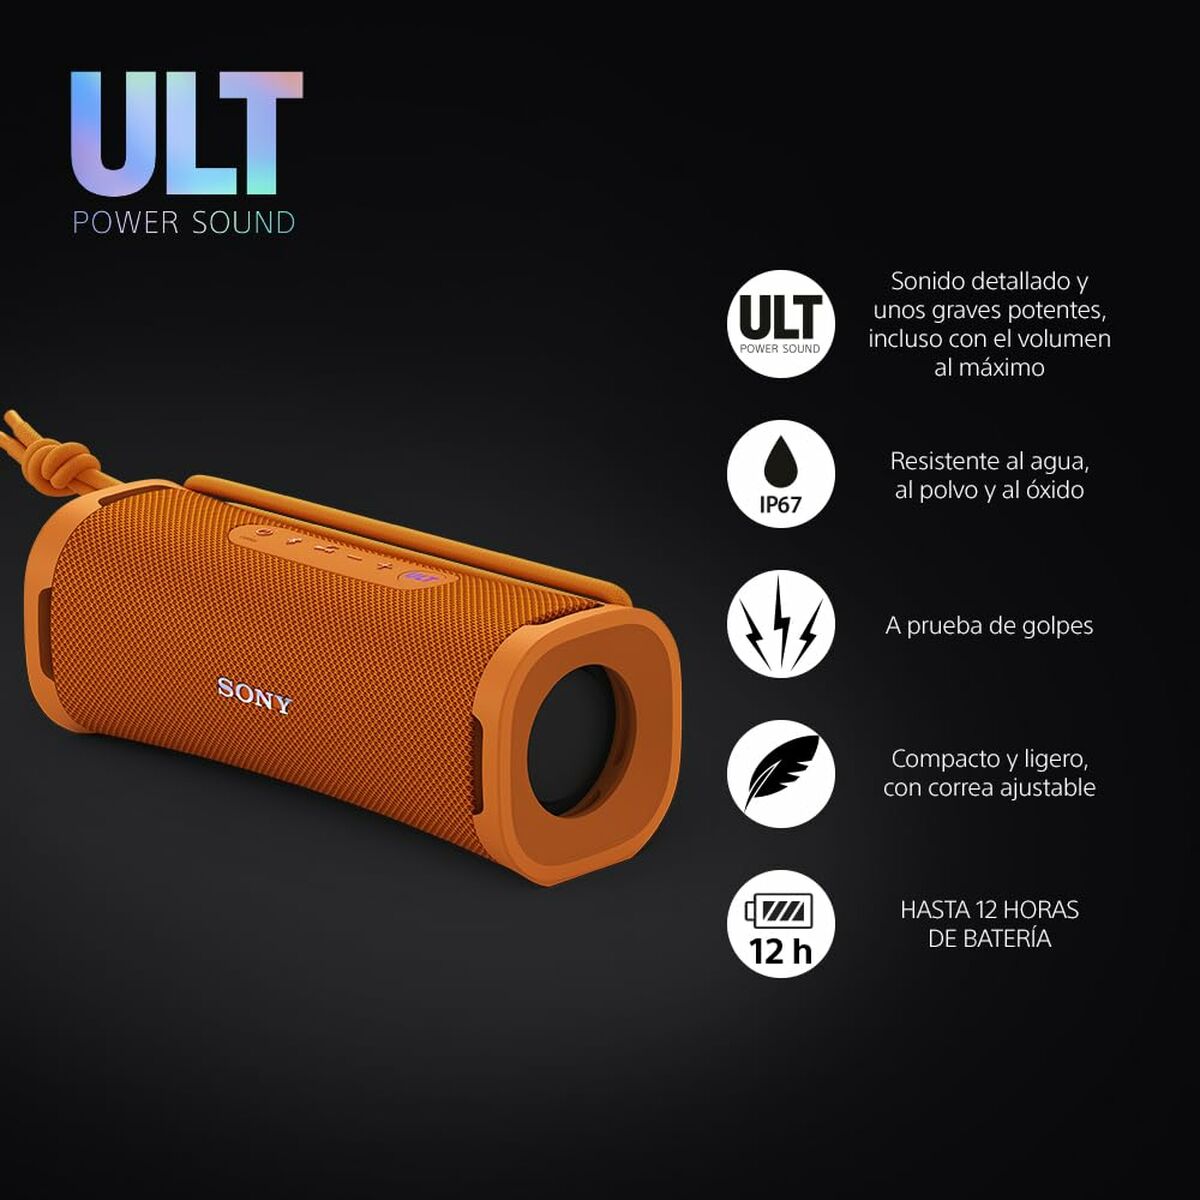 Portable Bluetooth Speakers Sony SRSULT10D Orange